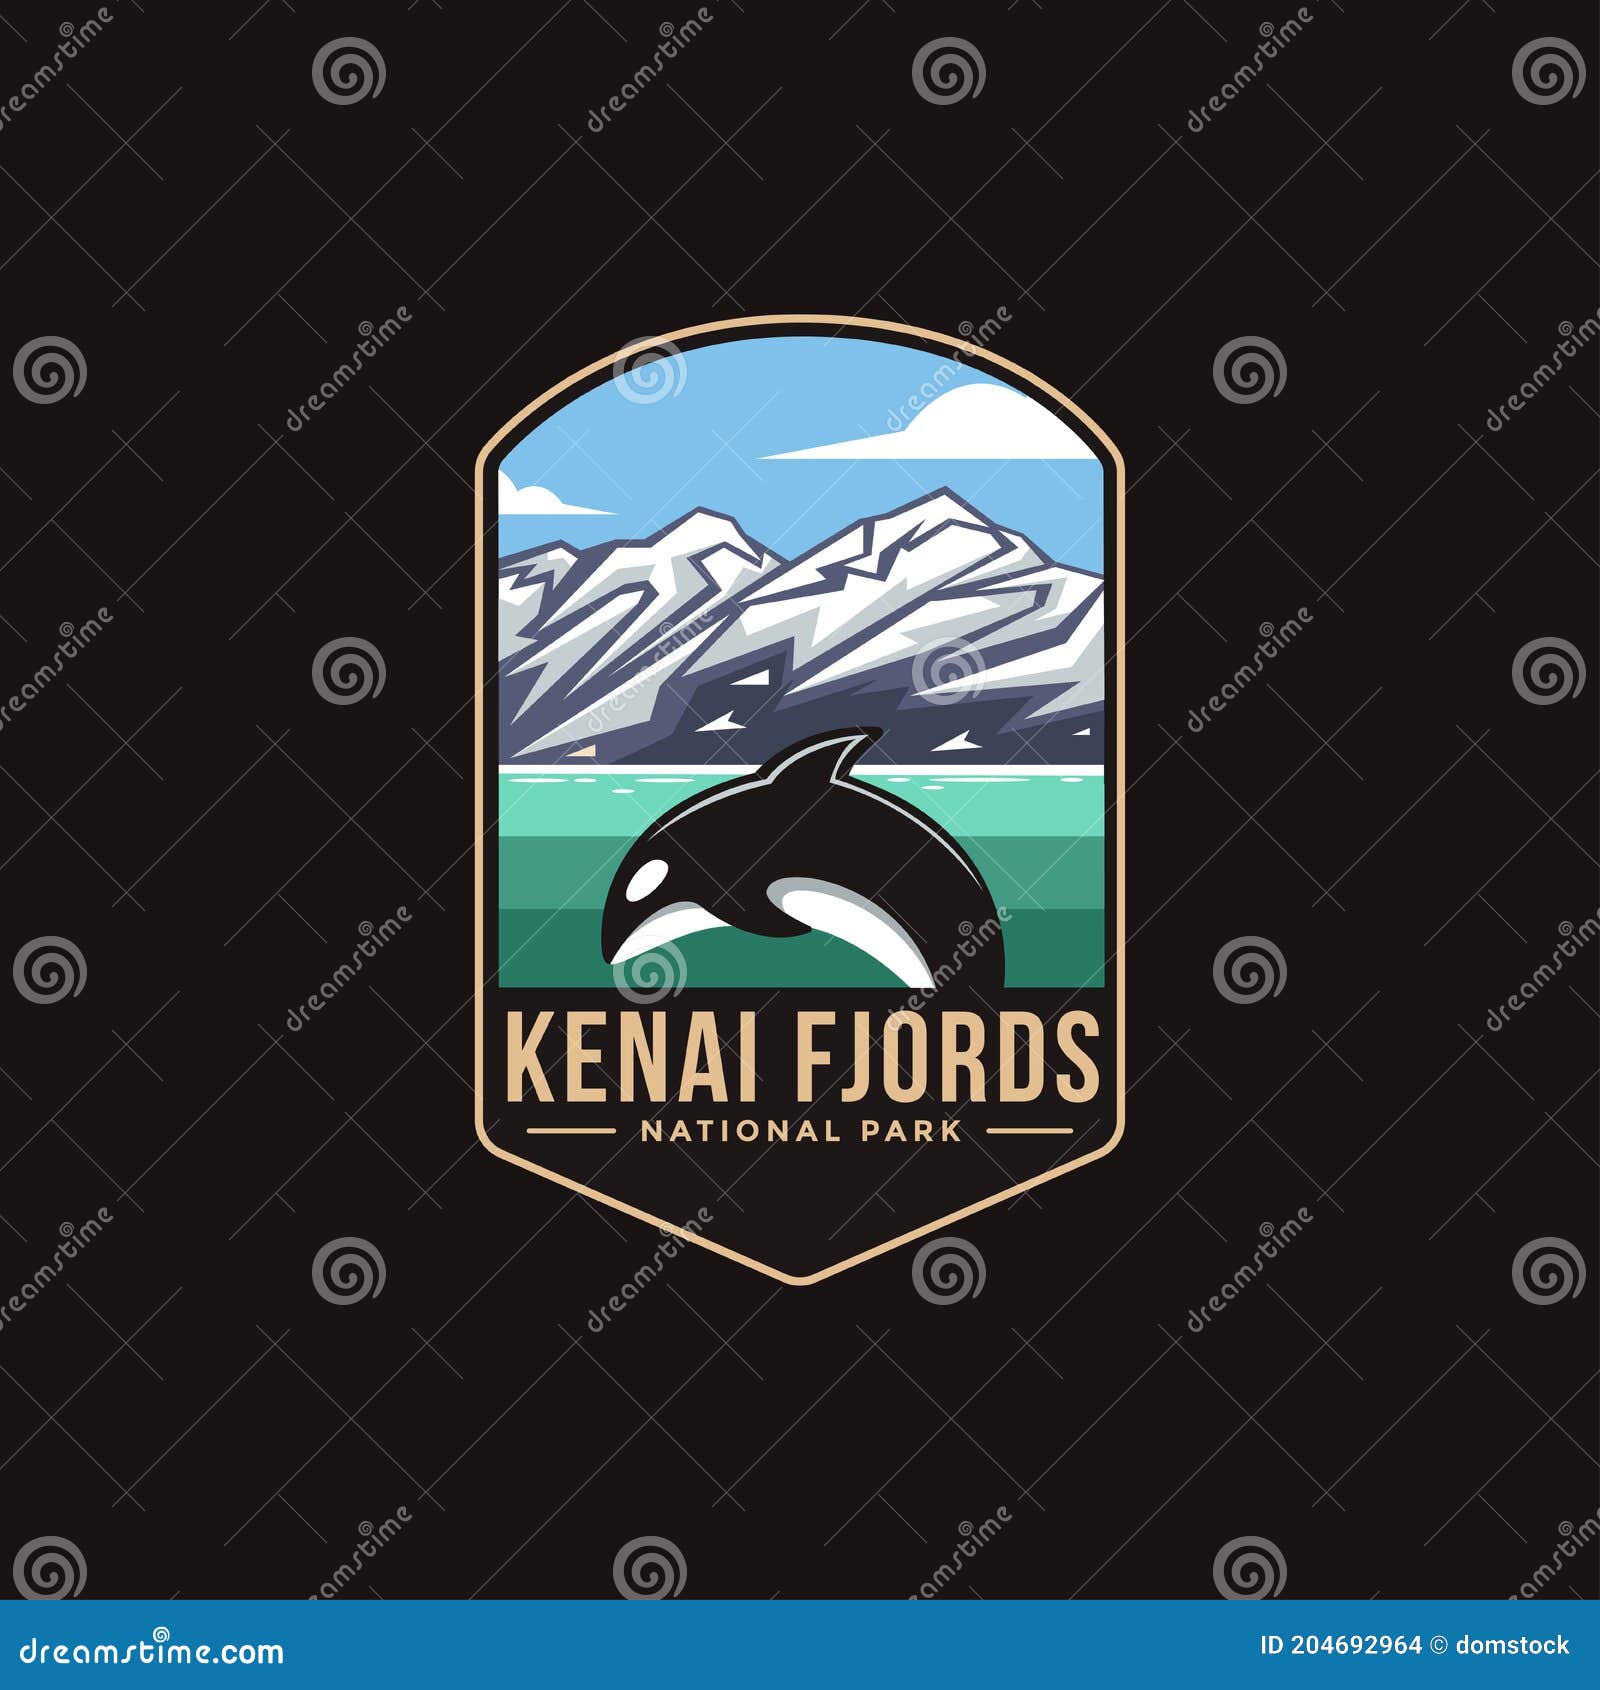 emblem patch logo  of kenai fjords national park emblem patch logo 